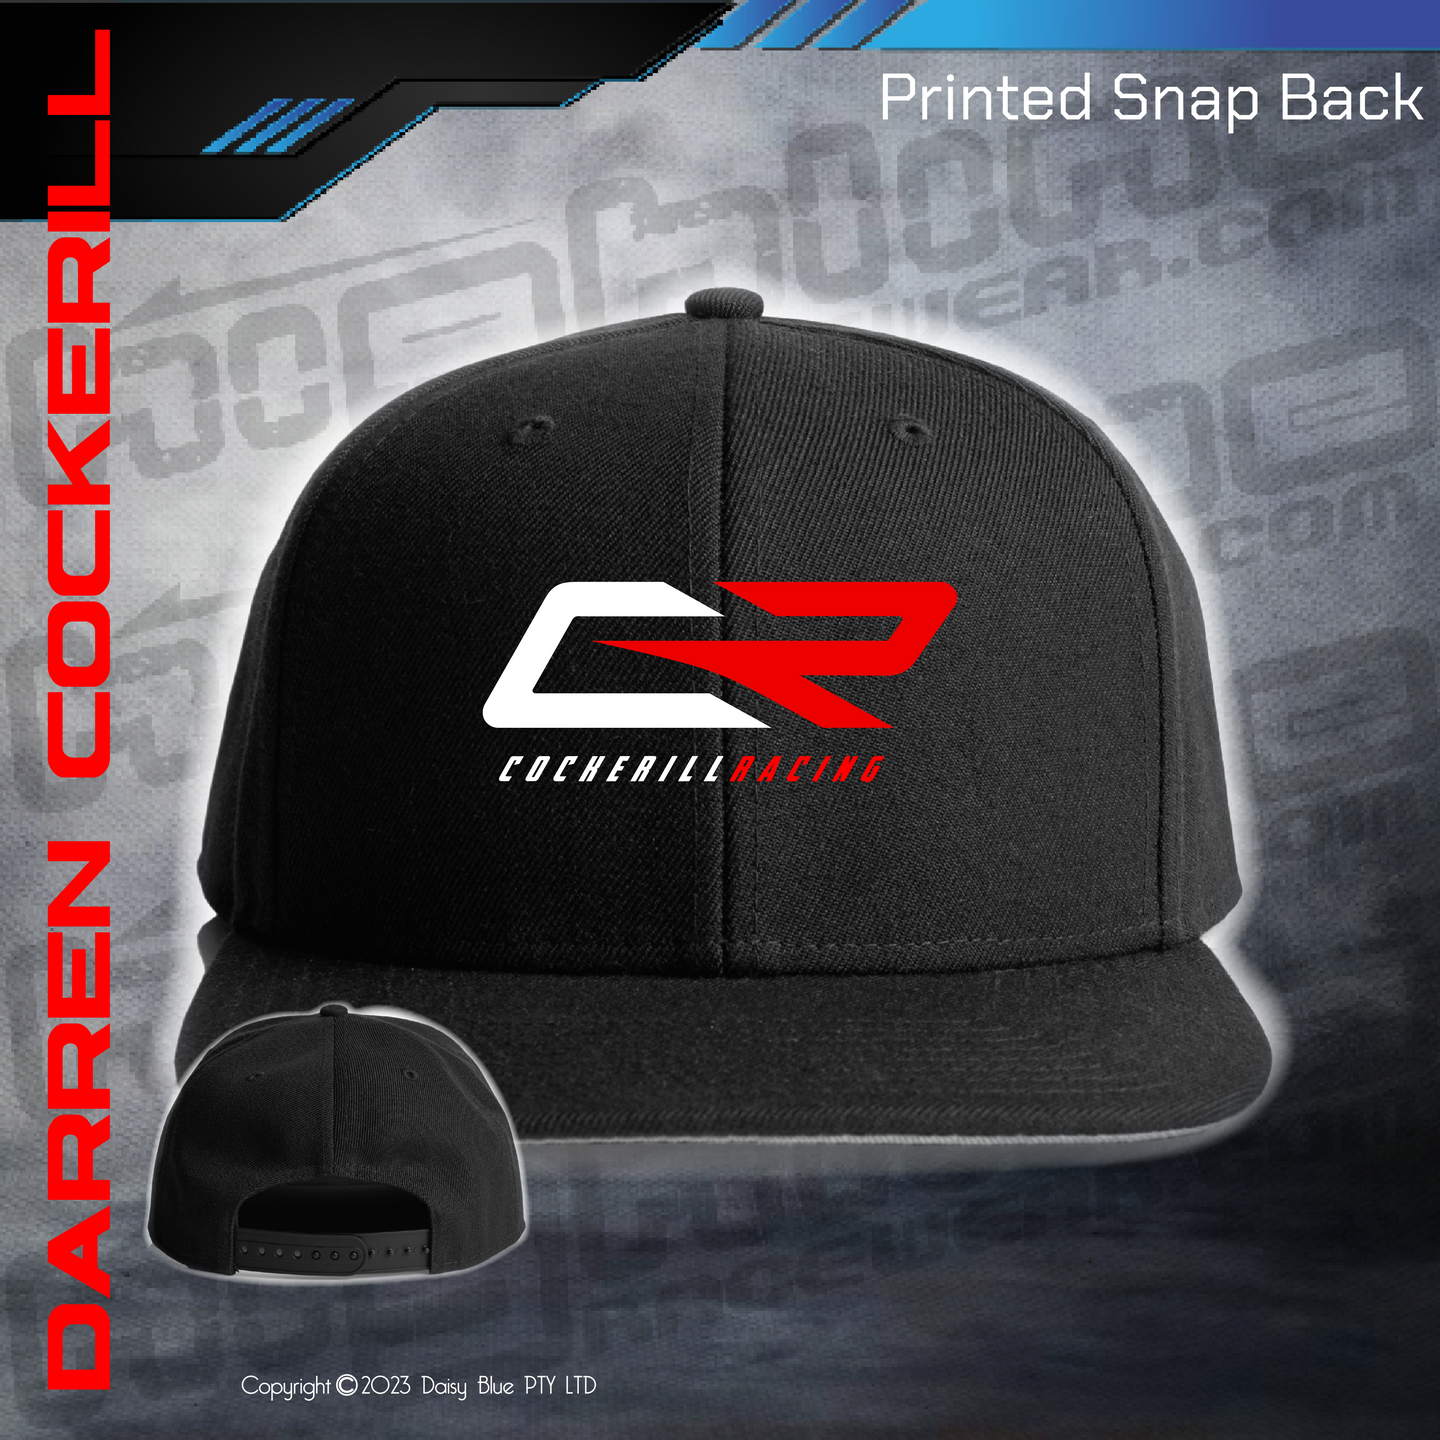 Printed Snap Back CAP - Cockerill Racing